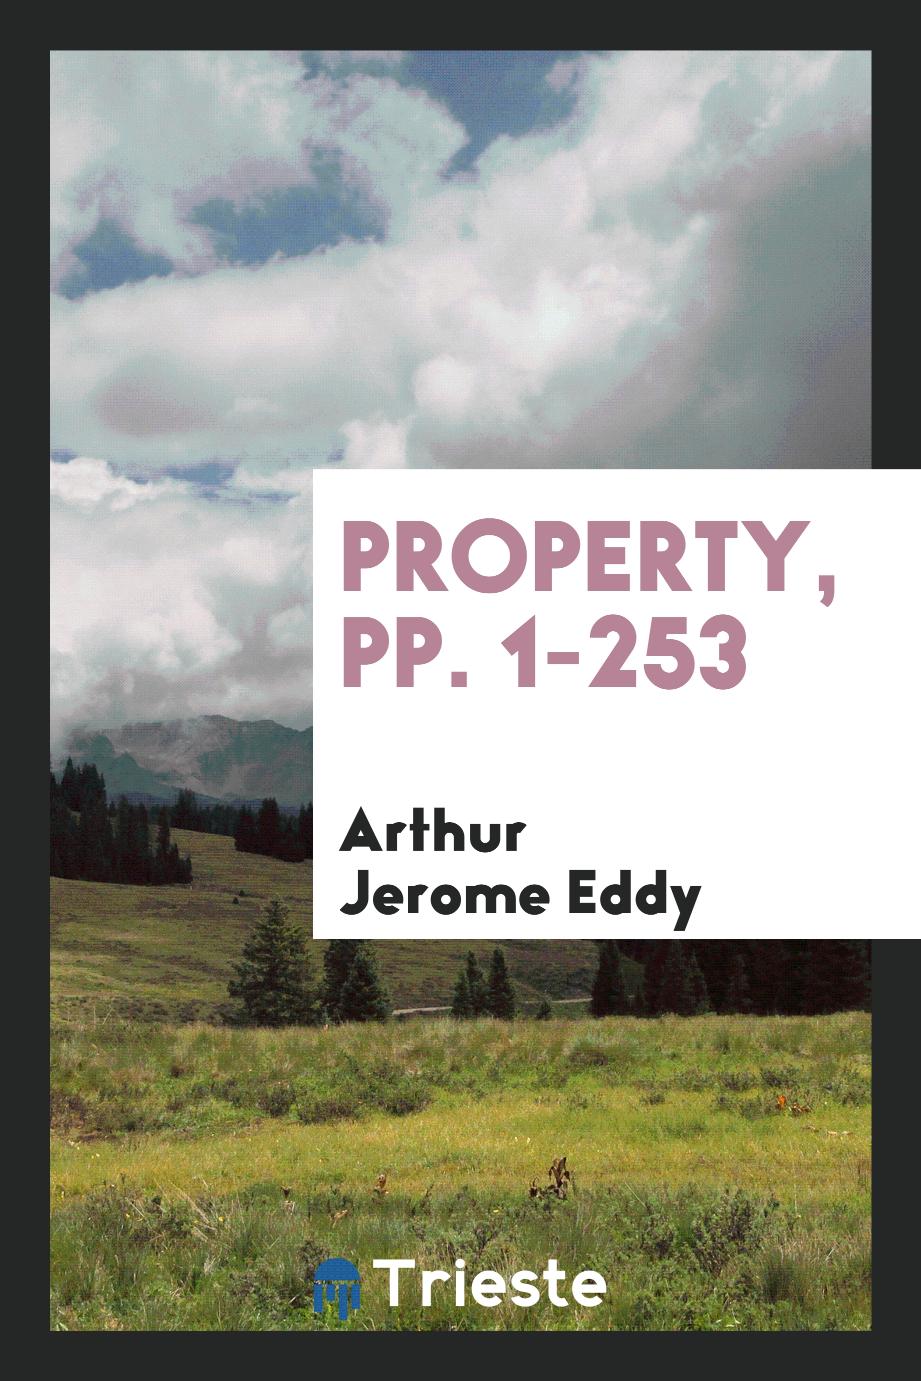 Property, pp. 1-253